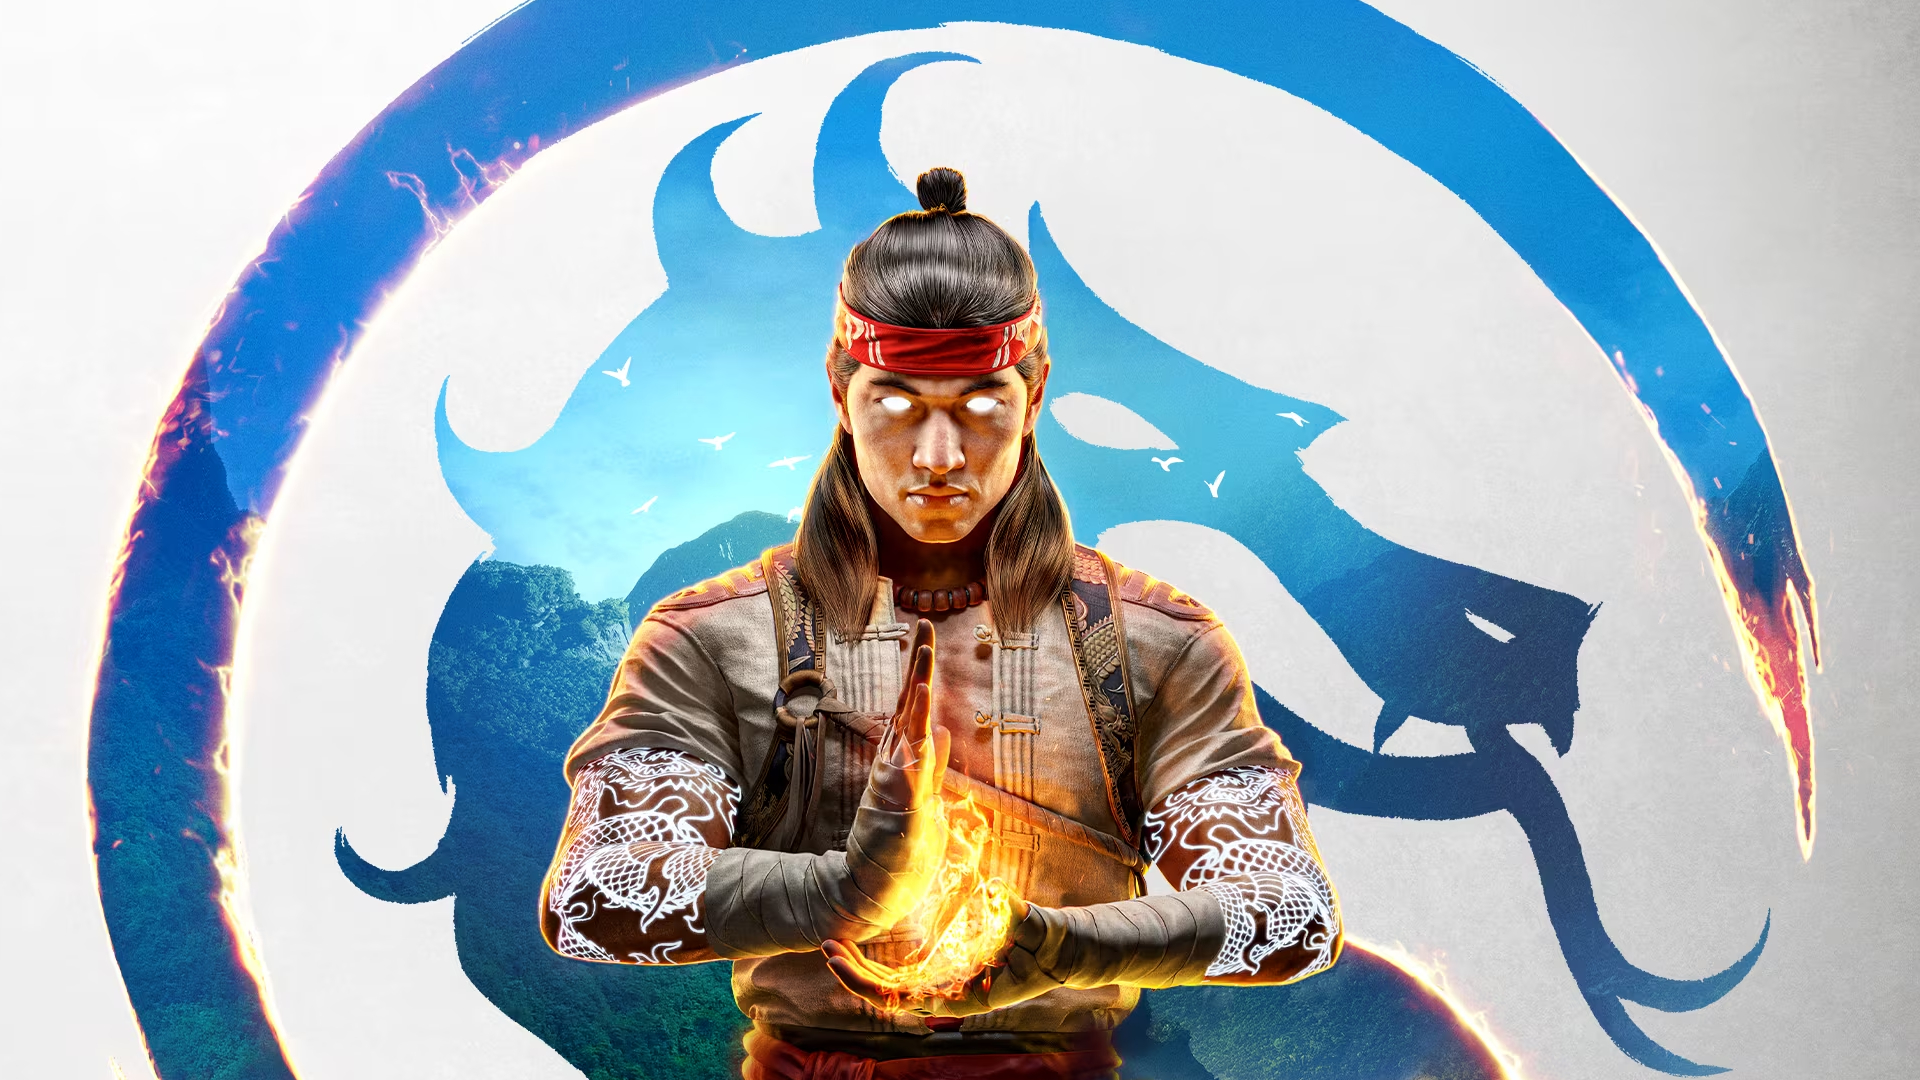 Mortal Kombat 1 Premium Edition players will get access 5 days